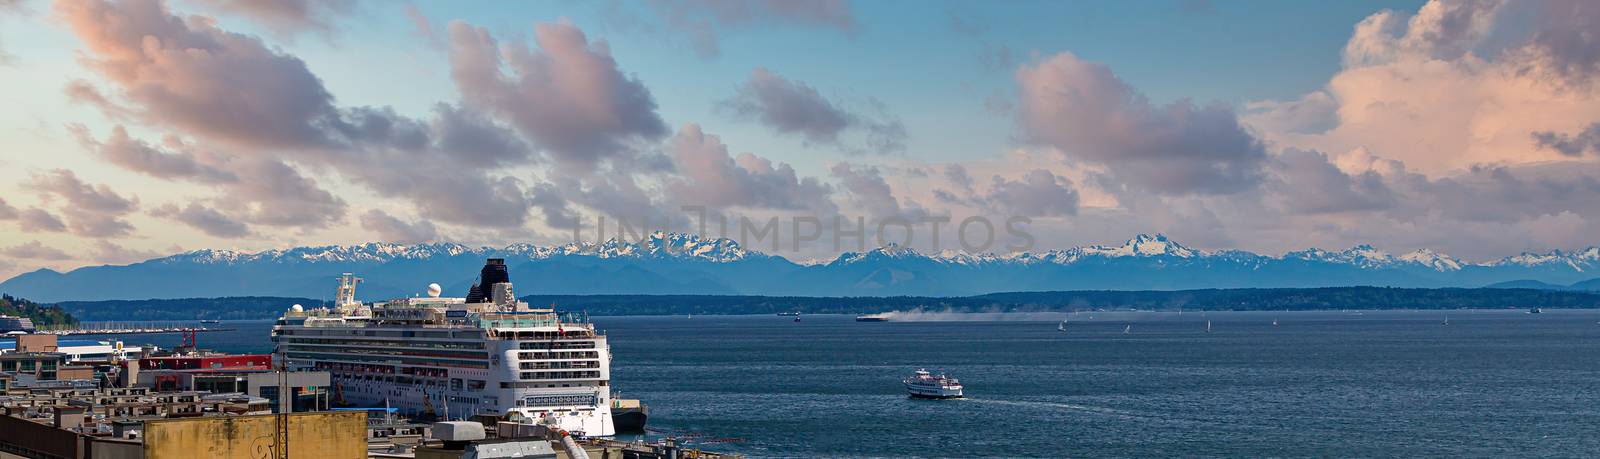 Cruise Ship in Seattle with Bainbridge Island at Dusk by dbvirago